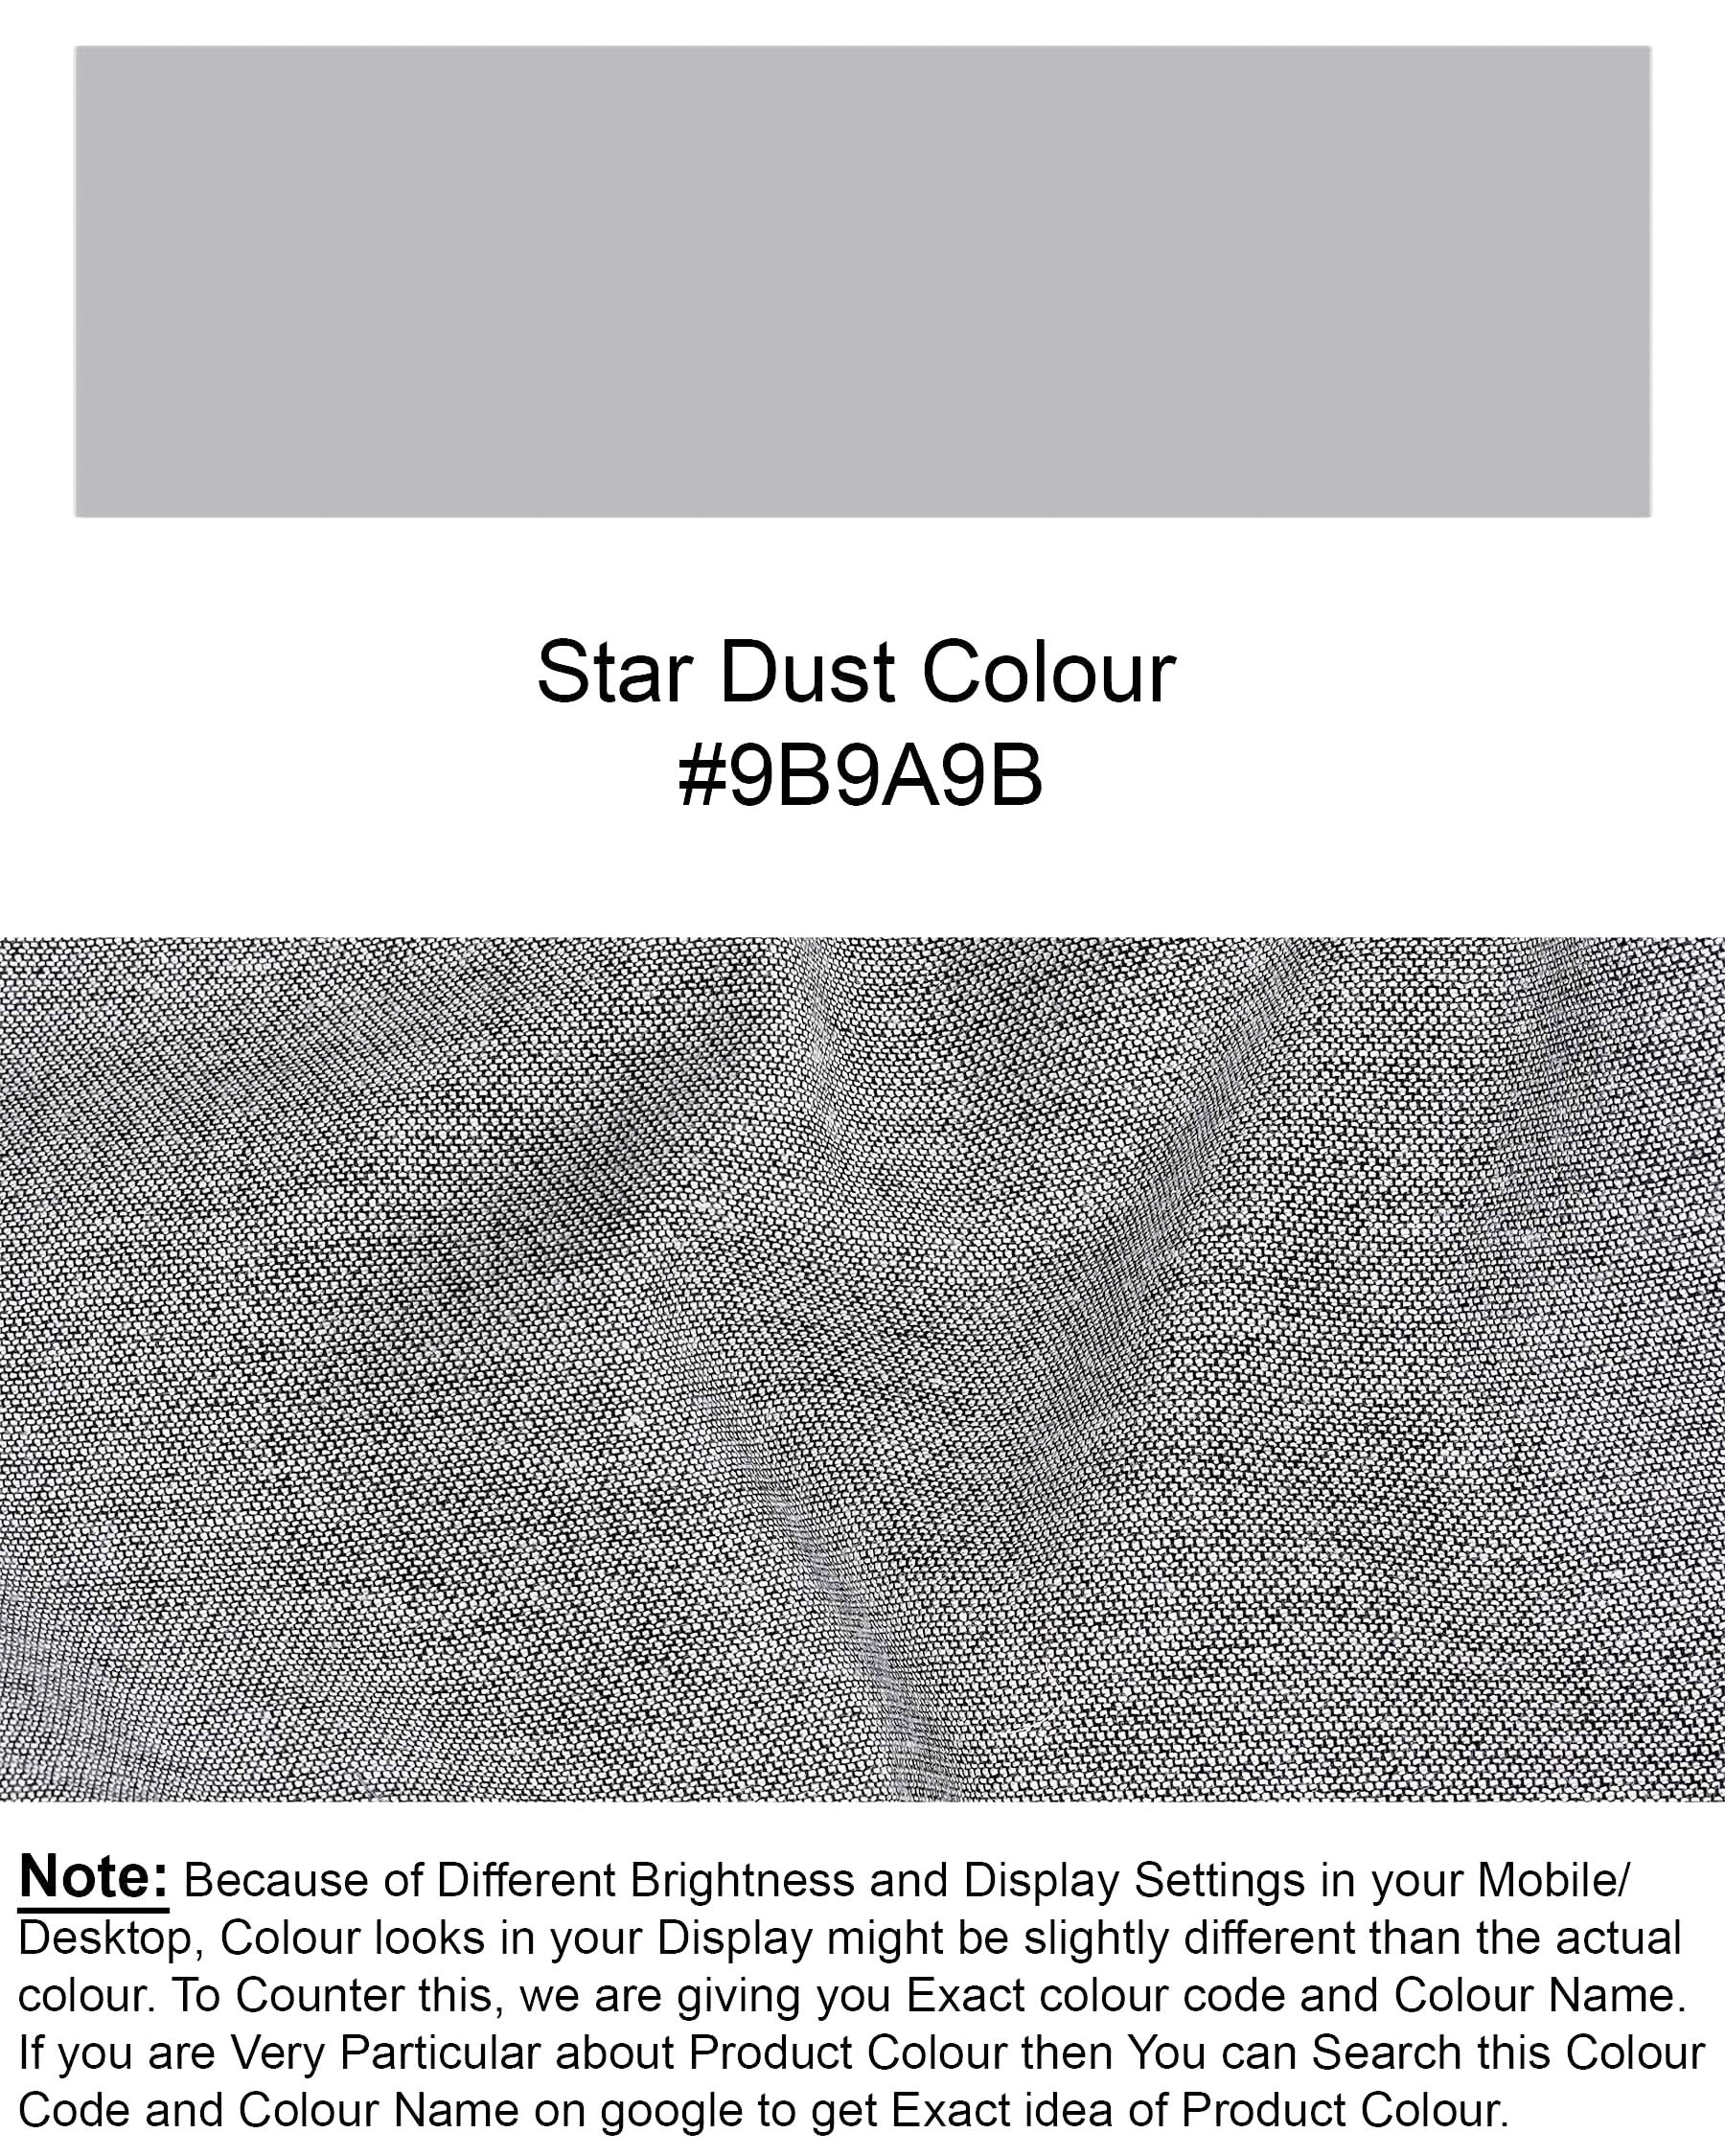 Star Dust Gray Cross Buttoned Bandhgala Premium Cotton Blazer BL1957-CBG2-36, BL1957-CBG2-38, BL1957-CBG2-40, BL1957-CBG2-42, BL1957-CBG2-44, BL1957-CBG2-46, BL1957-CBG2-48, BL1957-CBG2-50, BL1957-CBG2-52, BL1957-CBG2-54, BL1957-CBG2-56, BL1957-CBG2-58, BL1957-CBG2-60